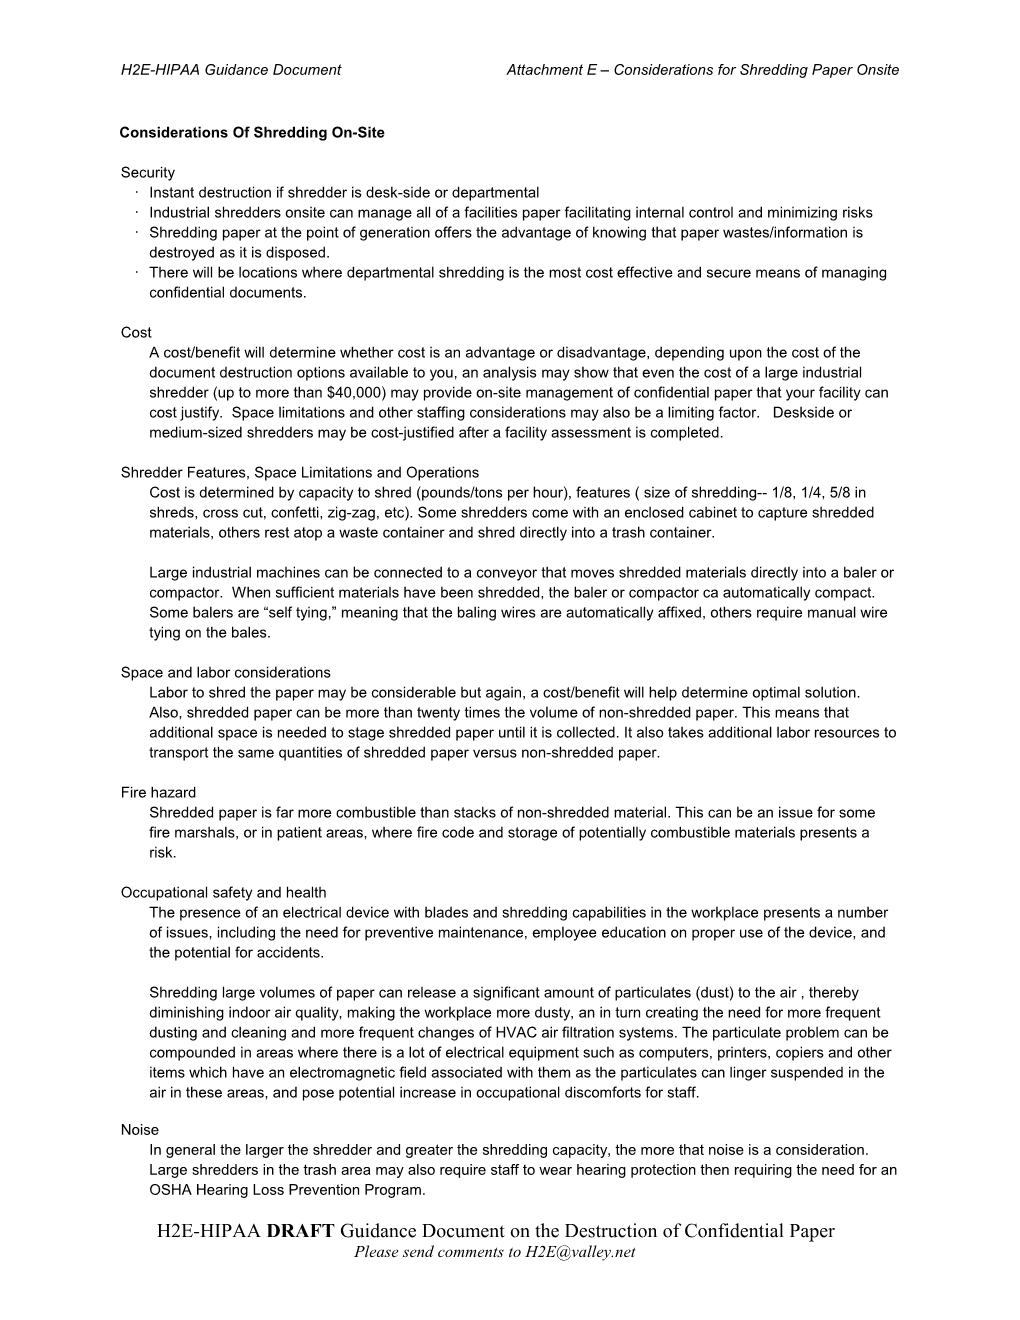 H2E HIPAA Guidance Document: Attachment E - Considerations Of Shredding On-Site